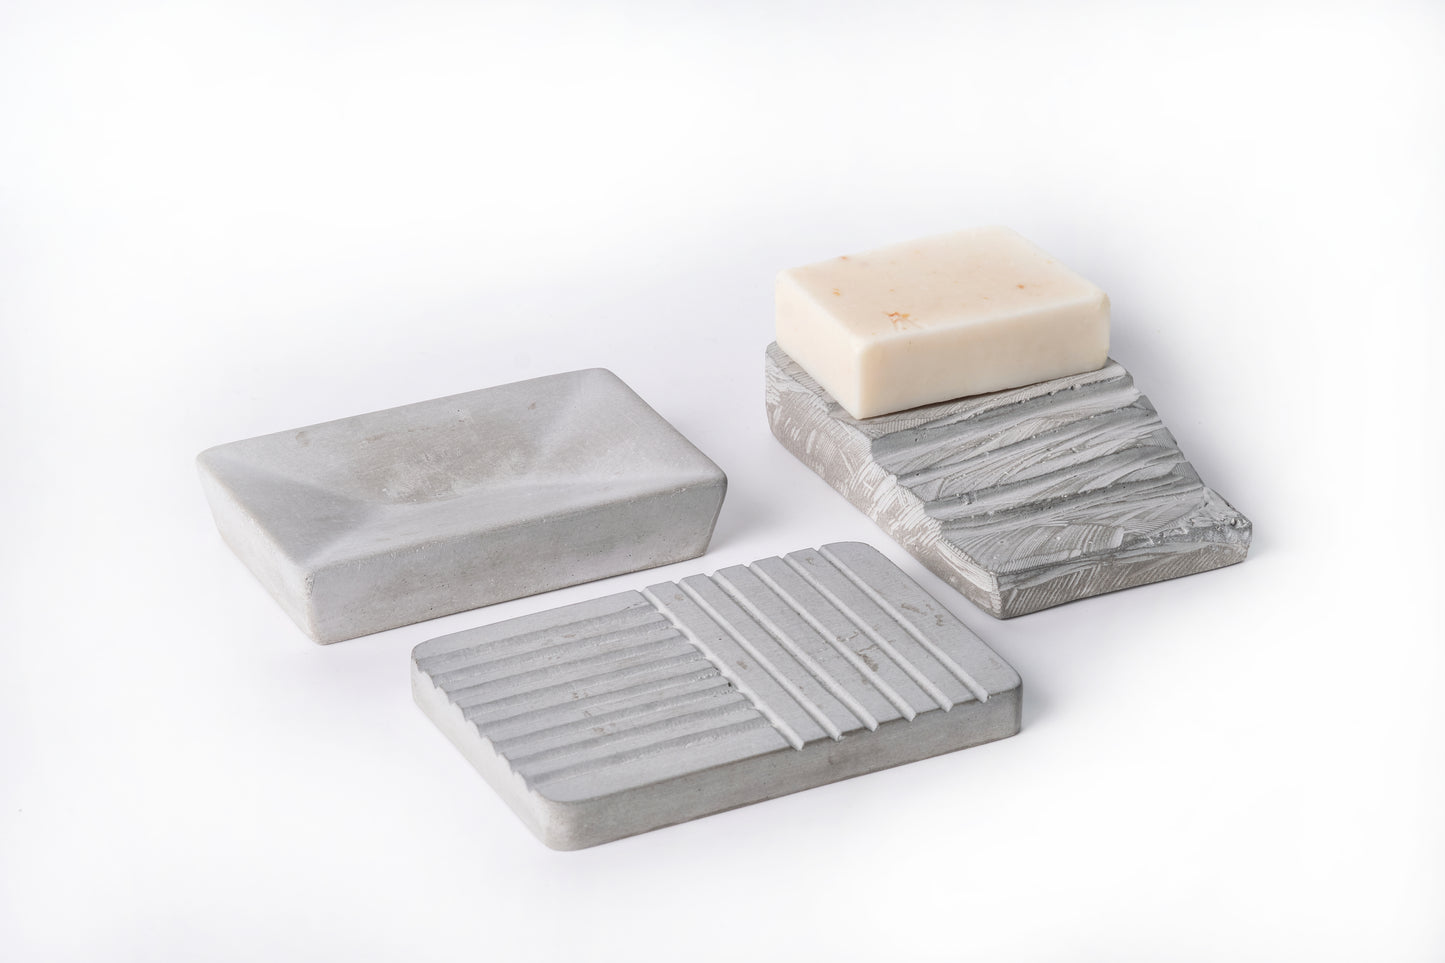 Concrete soap dish / holder (chunky design) - "grey"